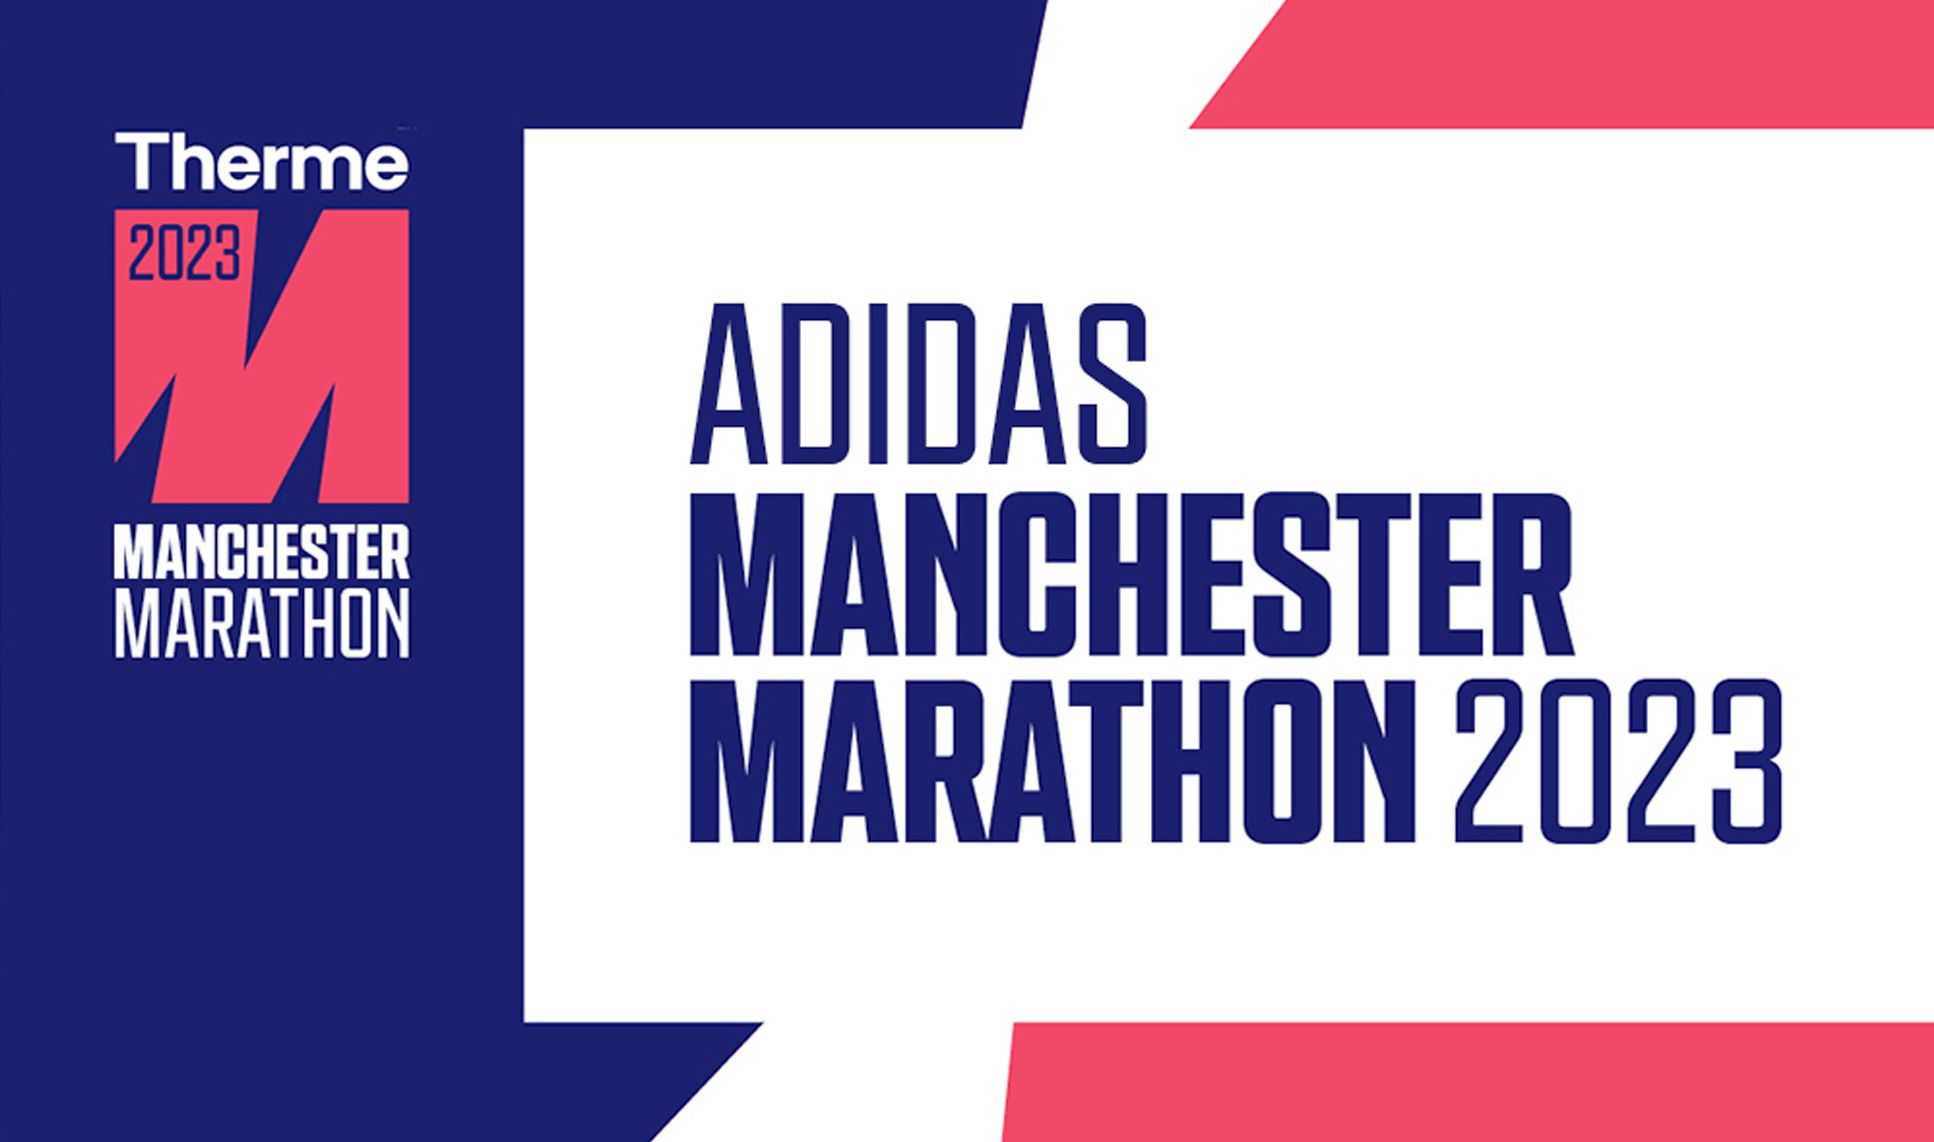 Manchester Marathon: adidas announced as sponsor